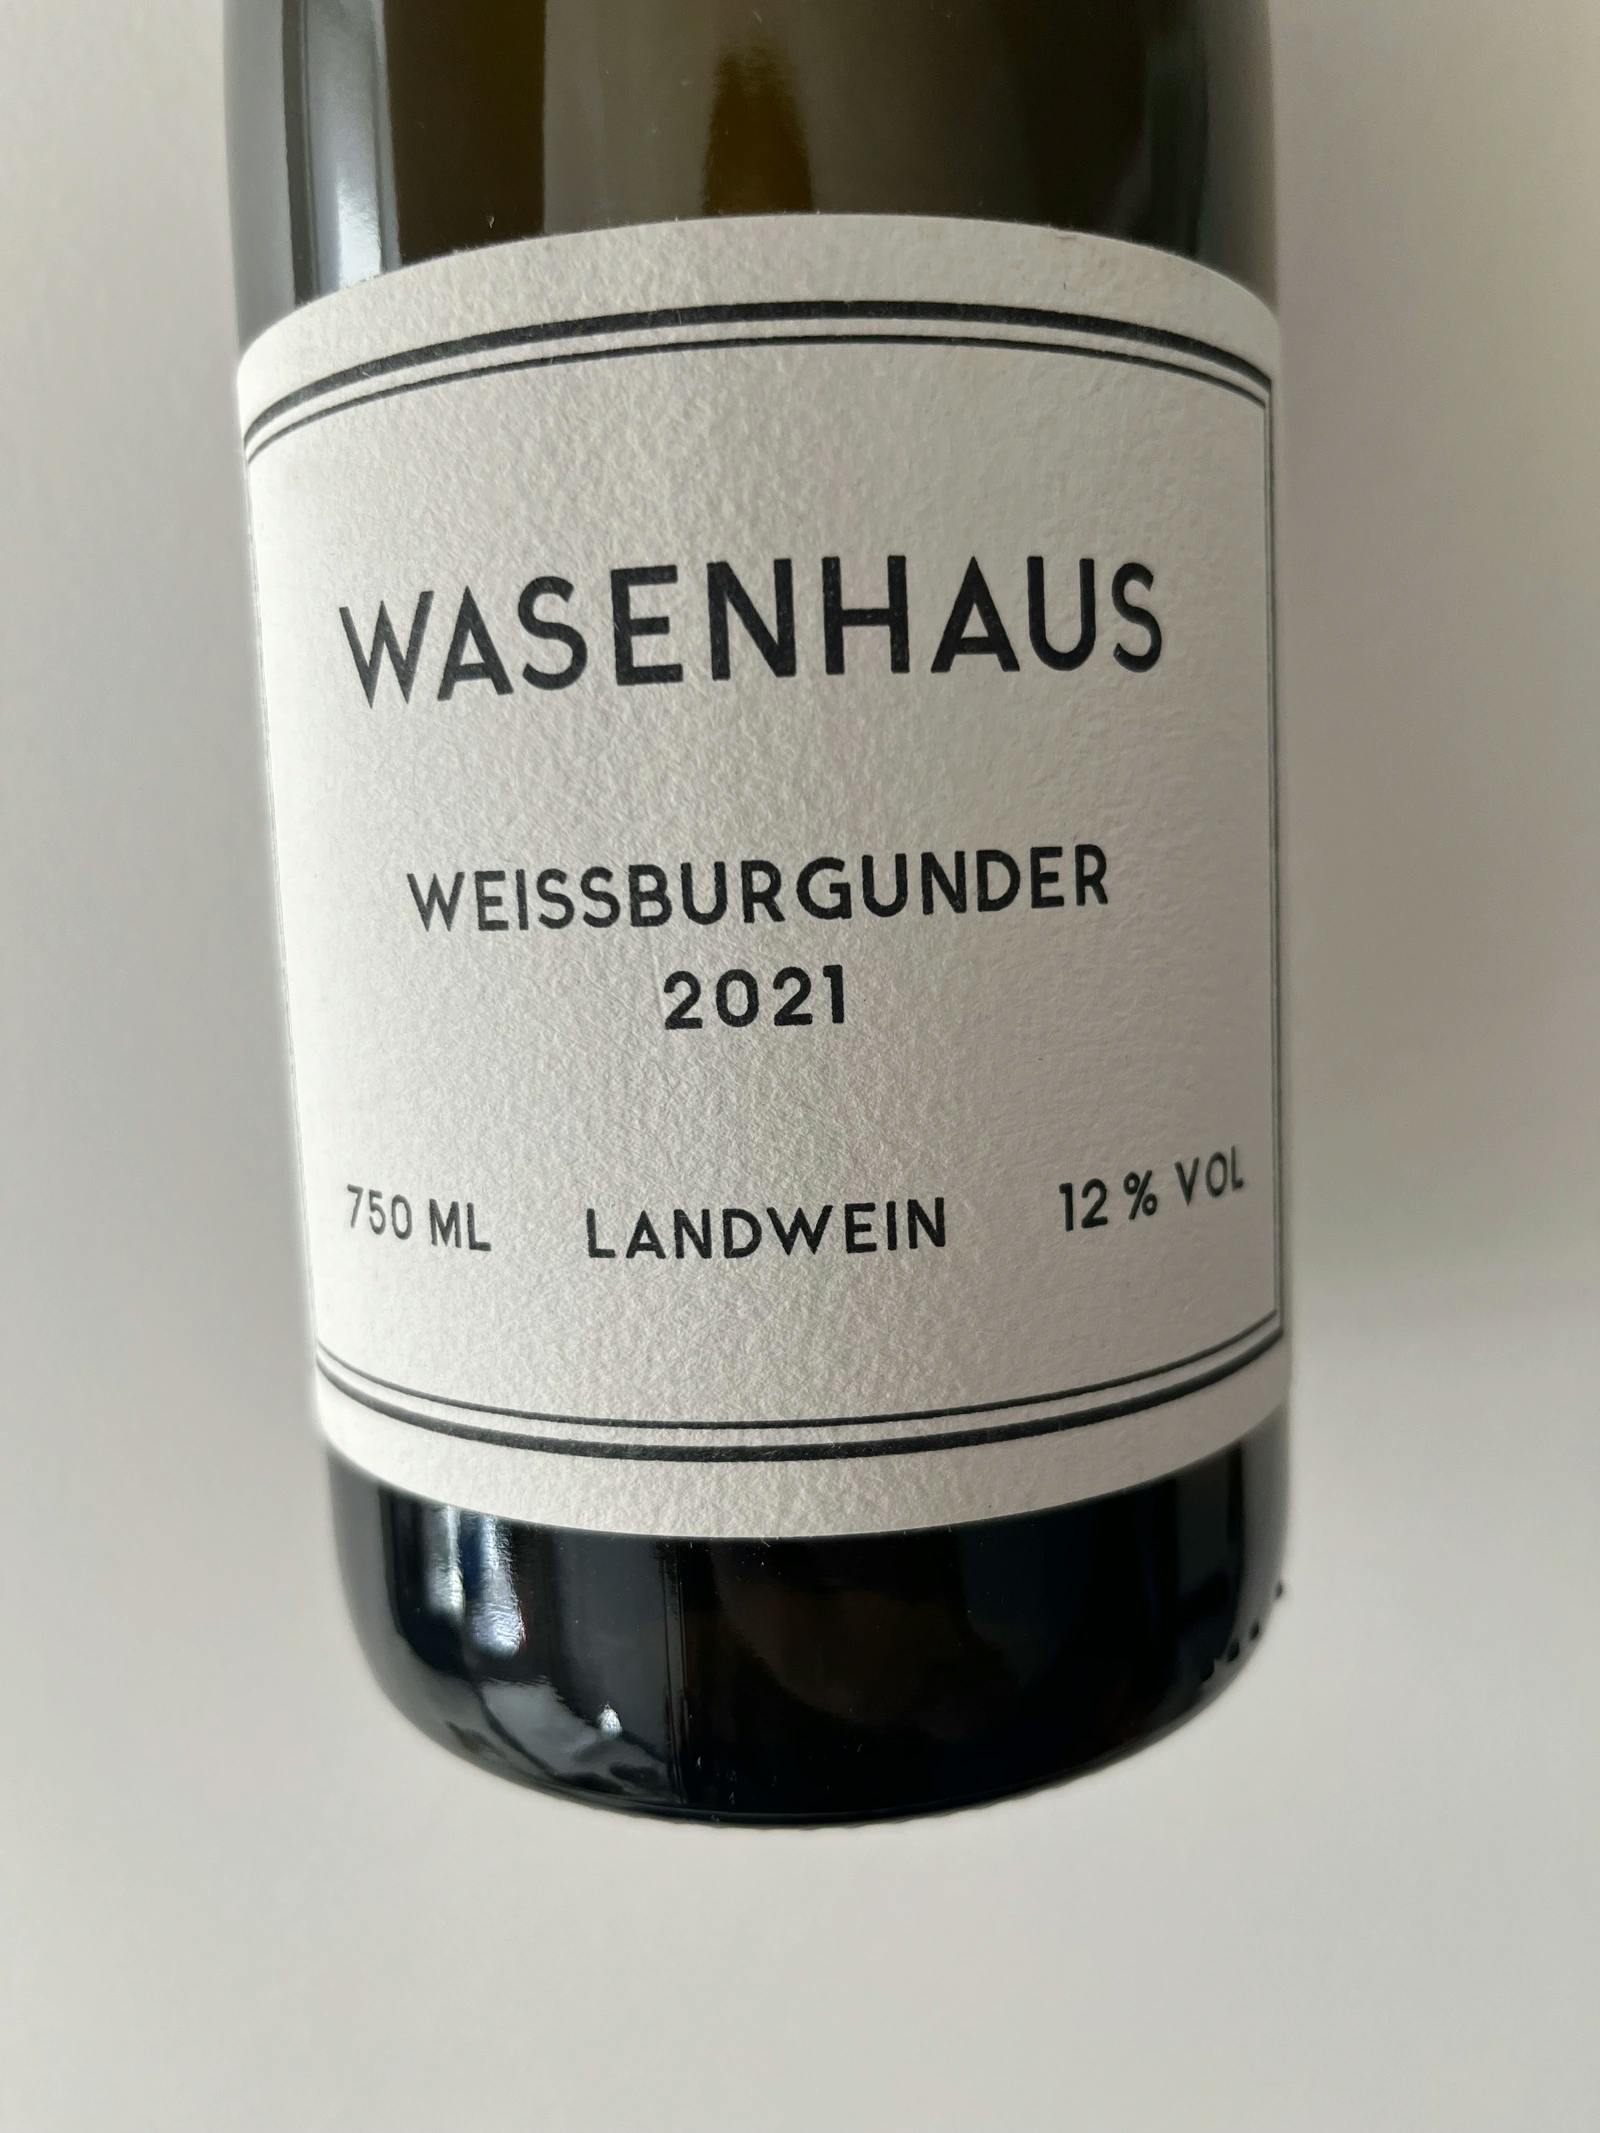 Wasenhaus Weissburgunder 2021